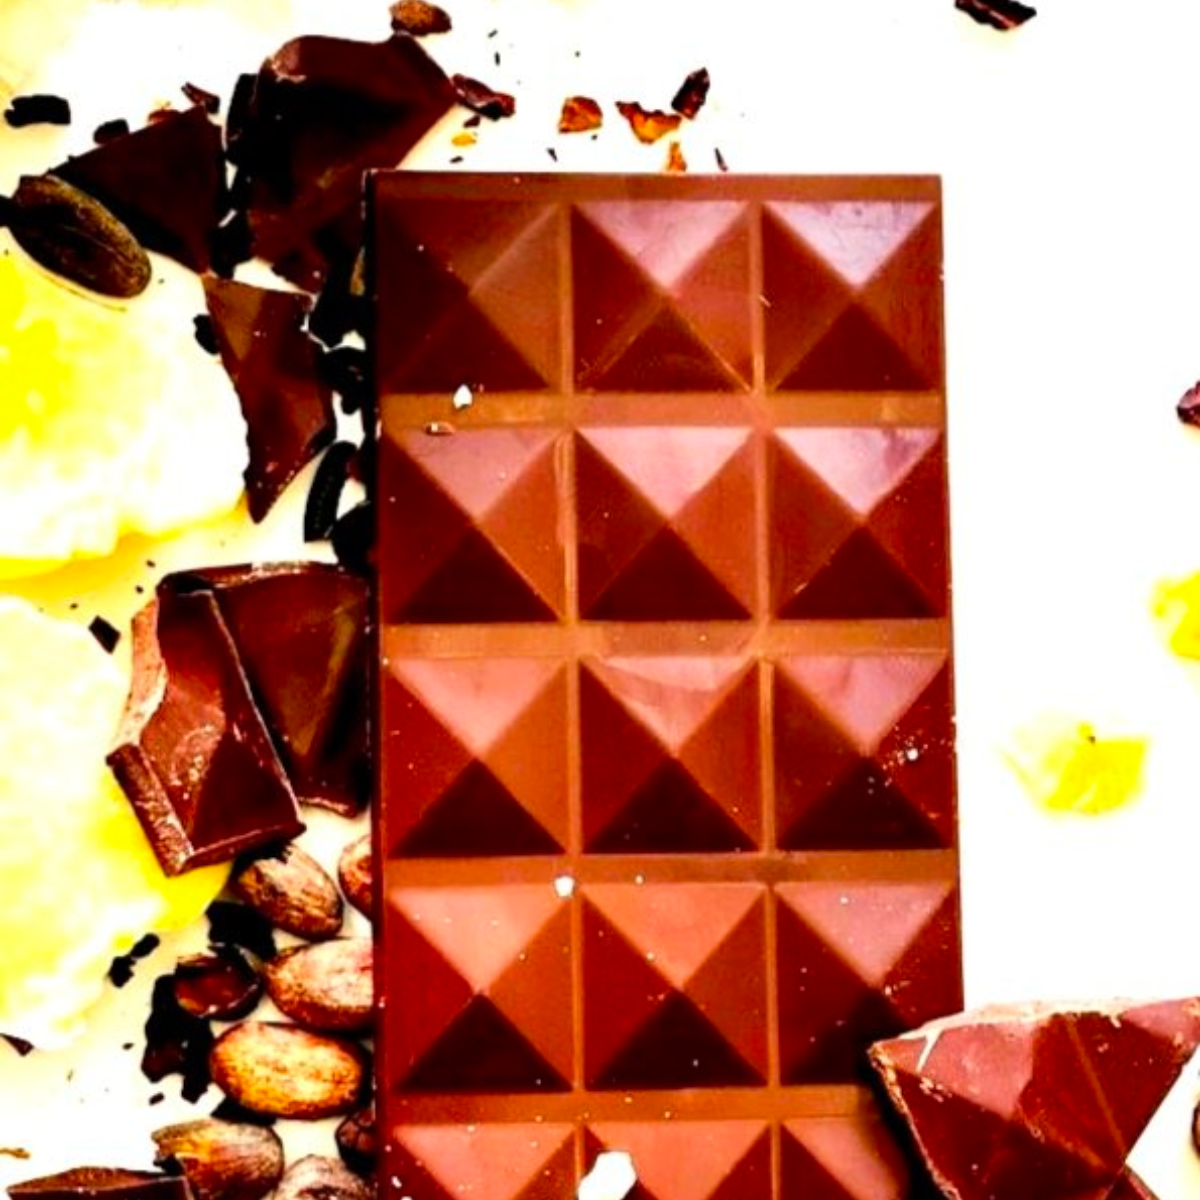 Dark Chocolate | Single Origin | Ecuador